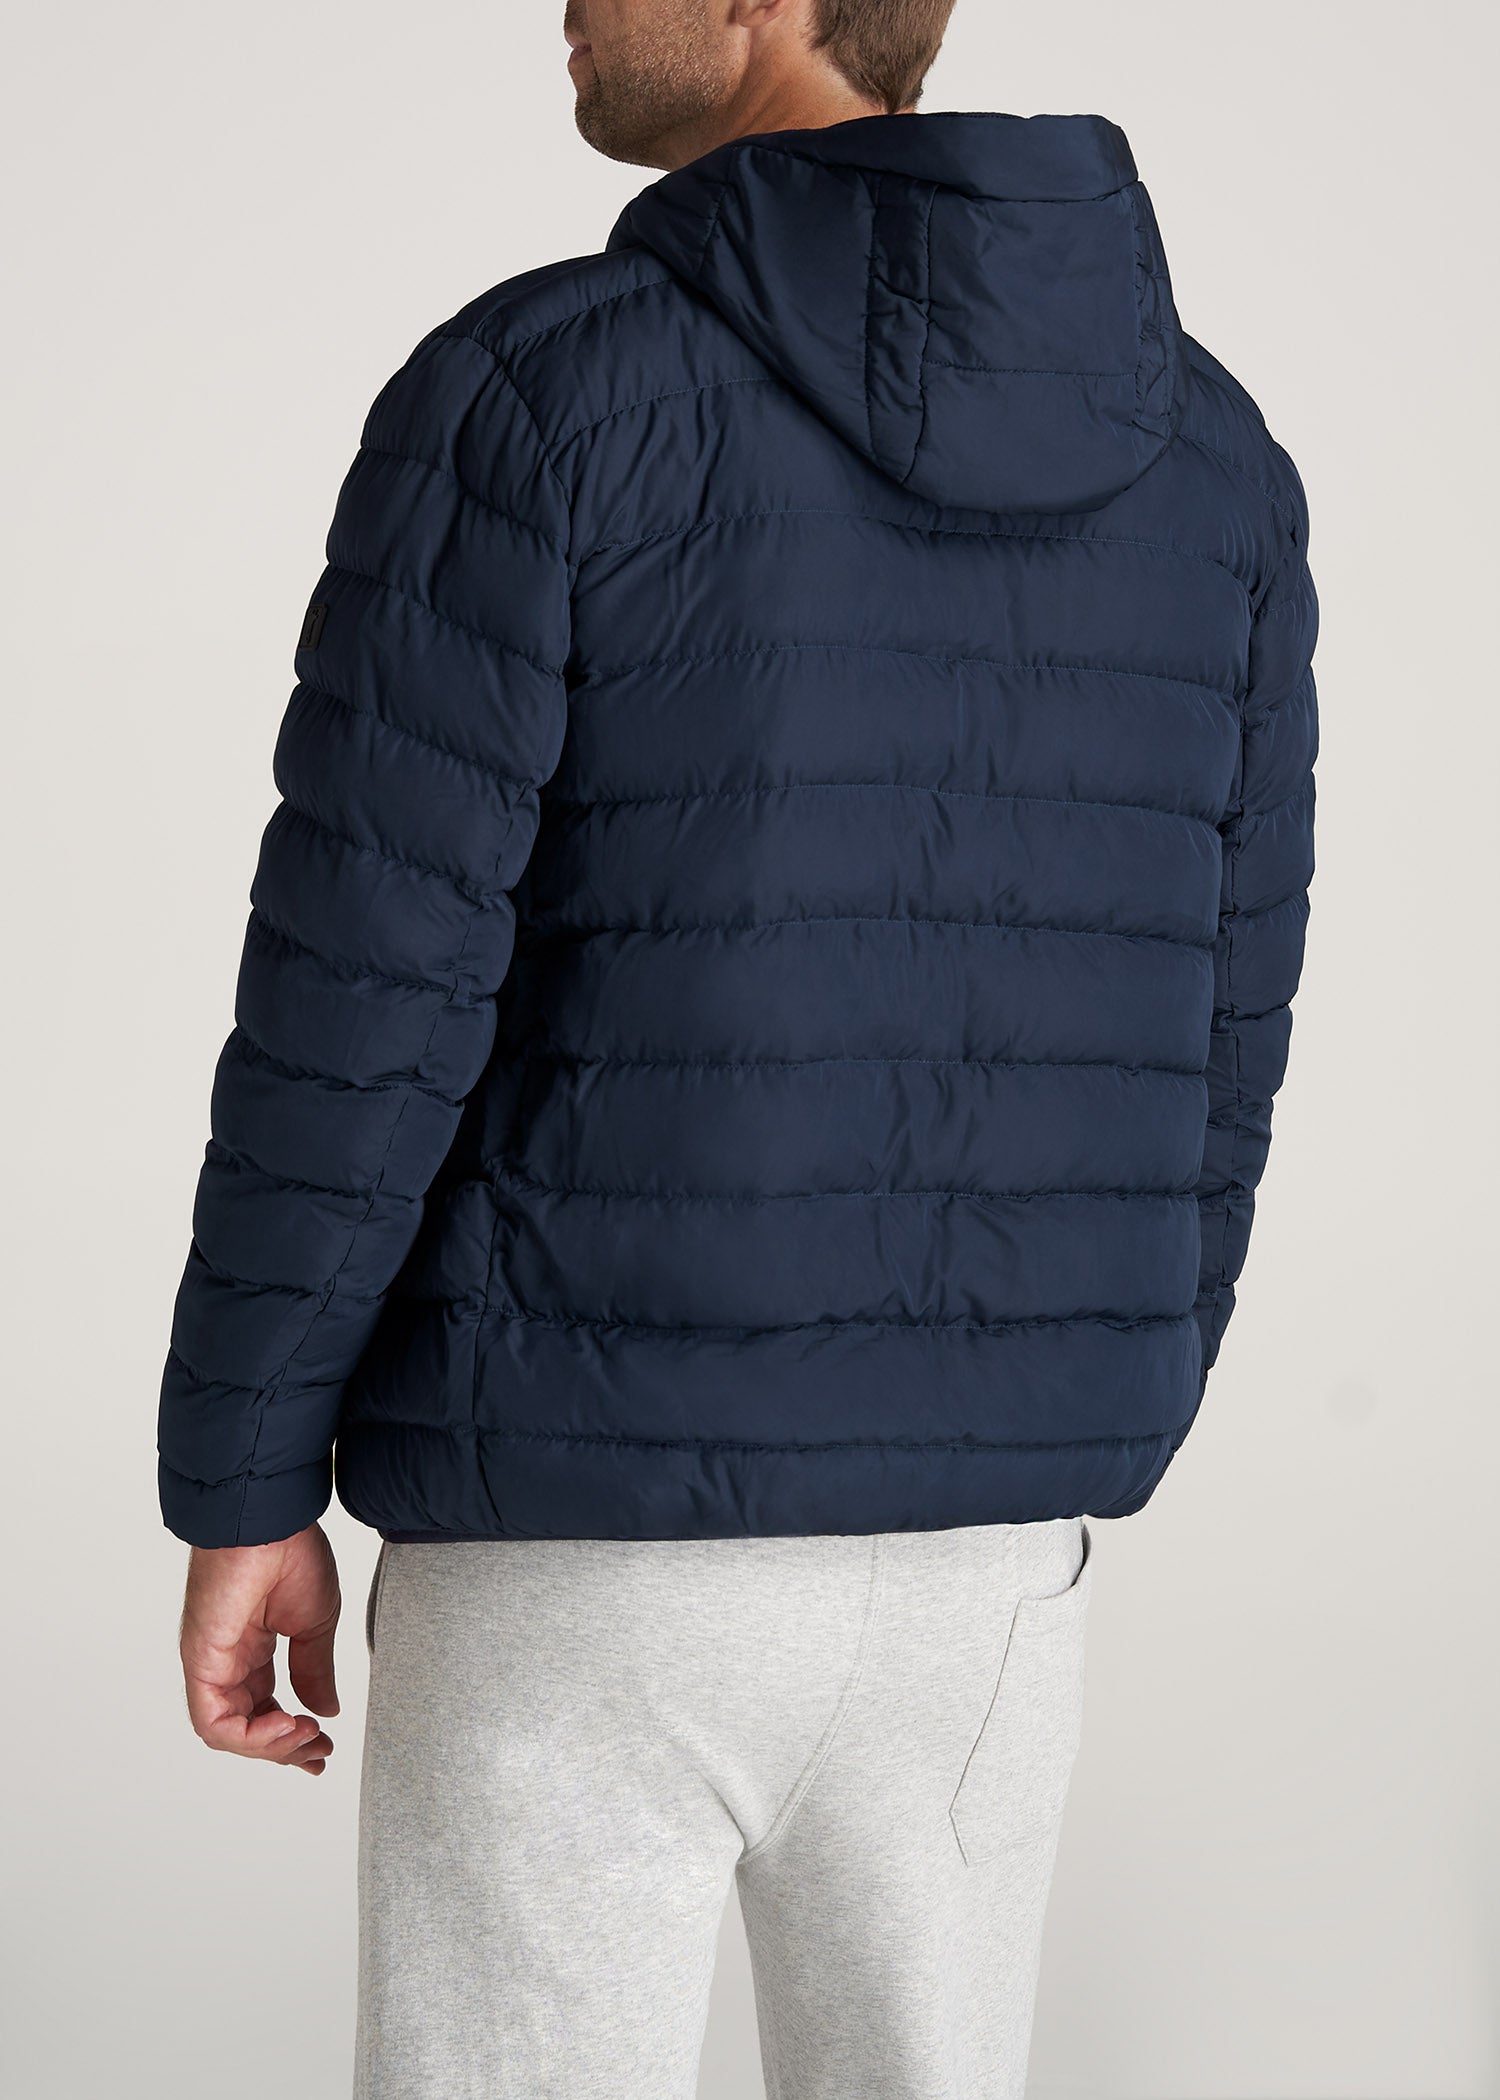 Navy Blue Hooded Puffer Jacket for Men